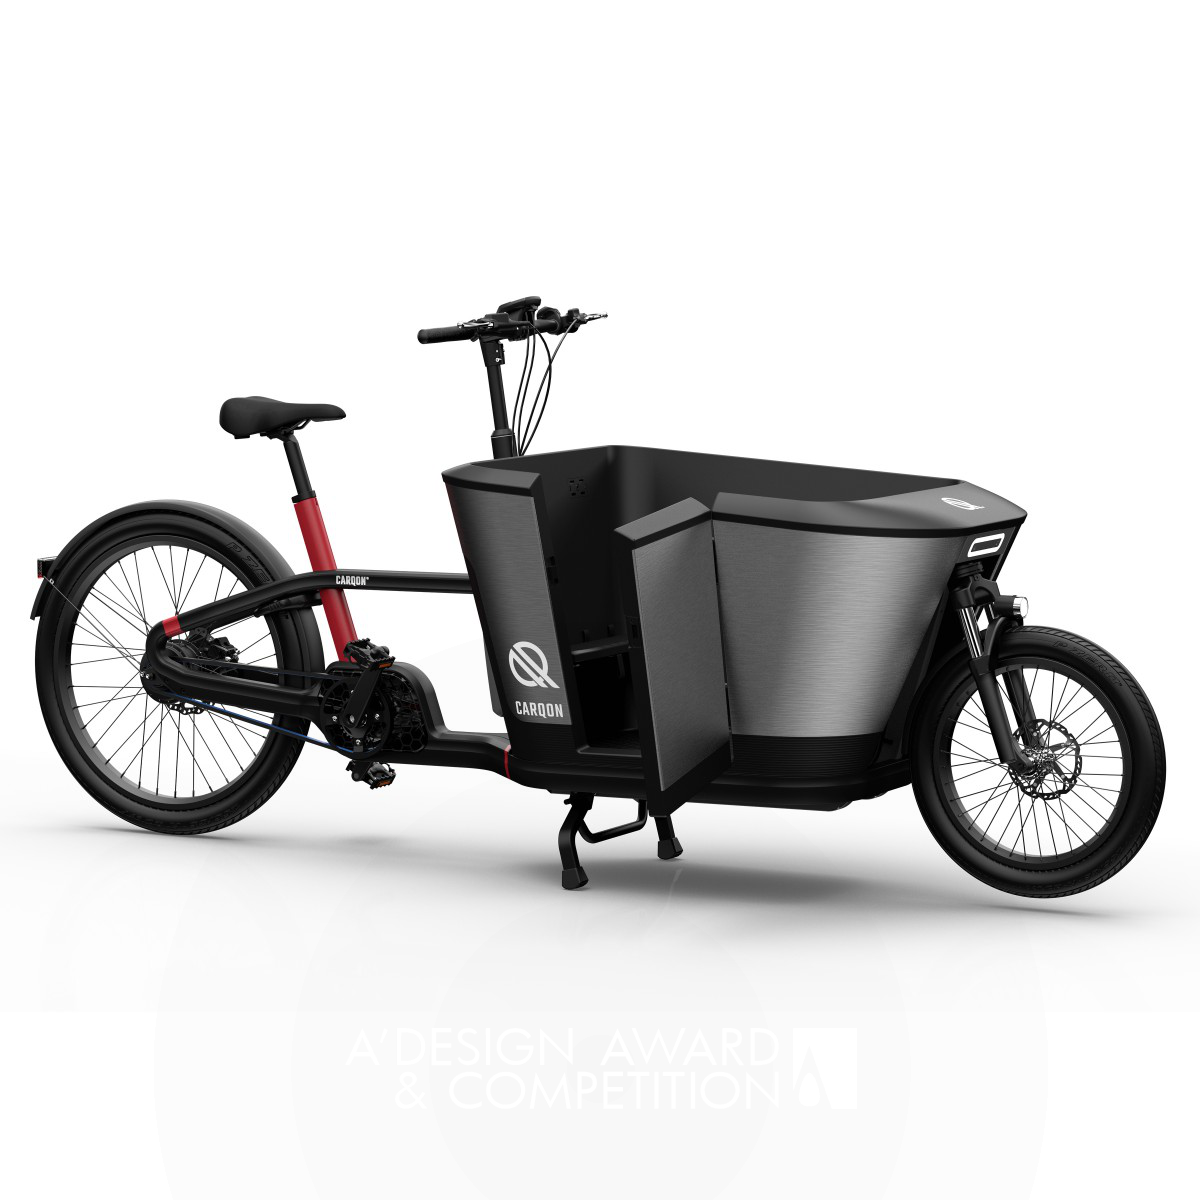 Carqon Electric Cargo Bike by Carqon Design Team Golden Vehicle, Mobility and Transportation Design Award Winner 2019 